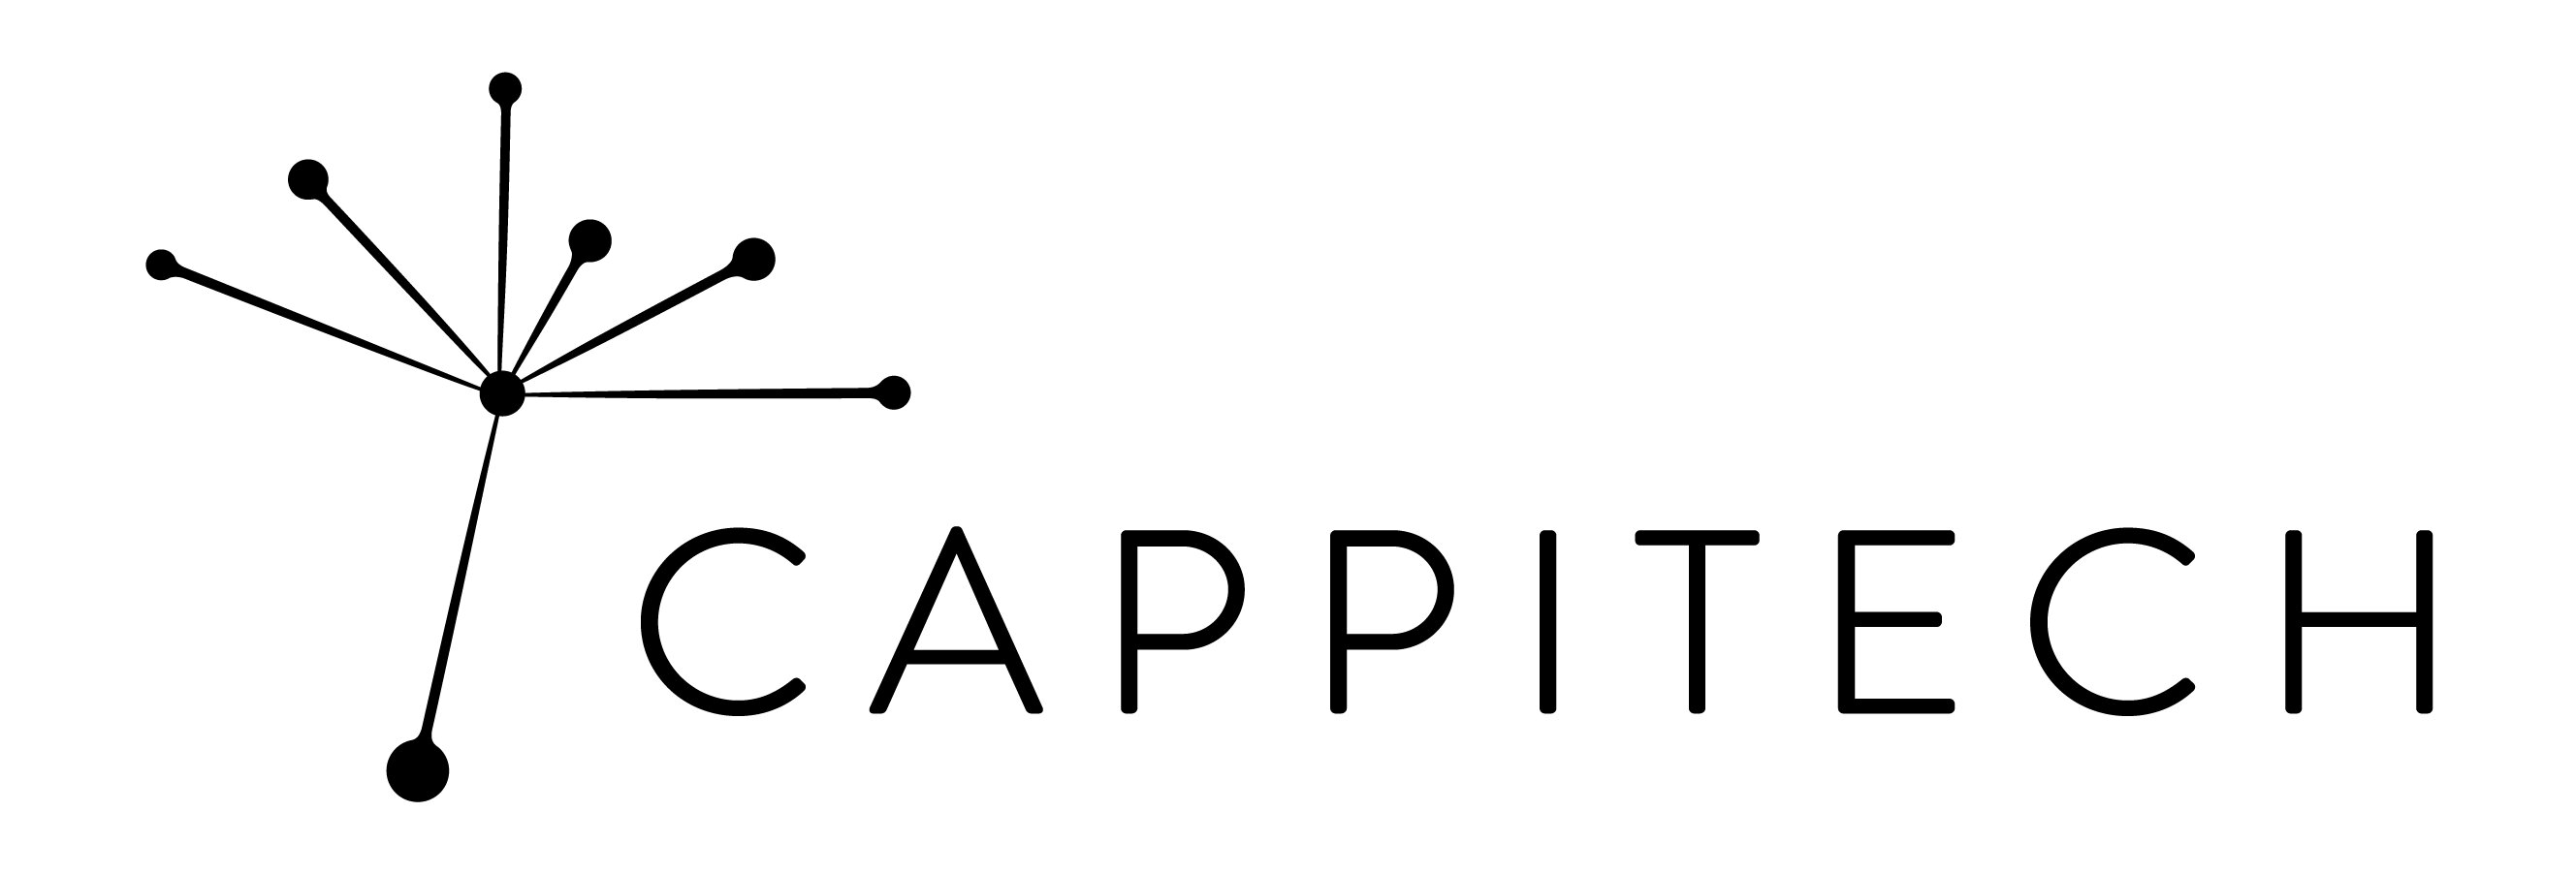 Cappitech Wins “Best Data Visualisation Provider” In Data Management Insight Awards 2020